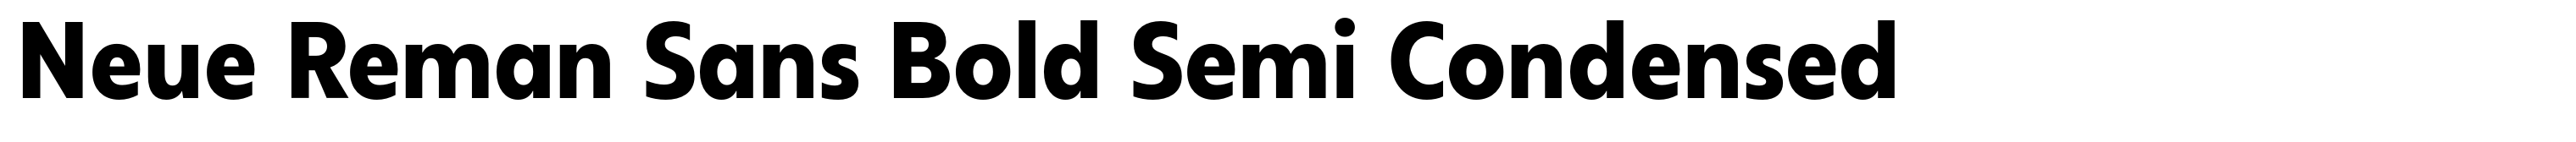 Neue Reman Sans Bold Semi Condensed